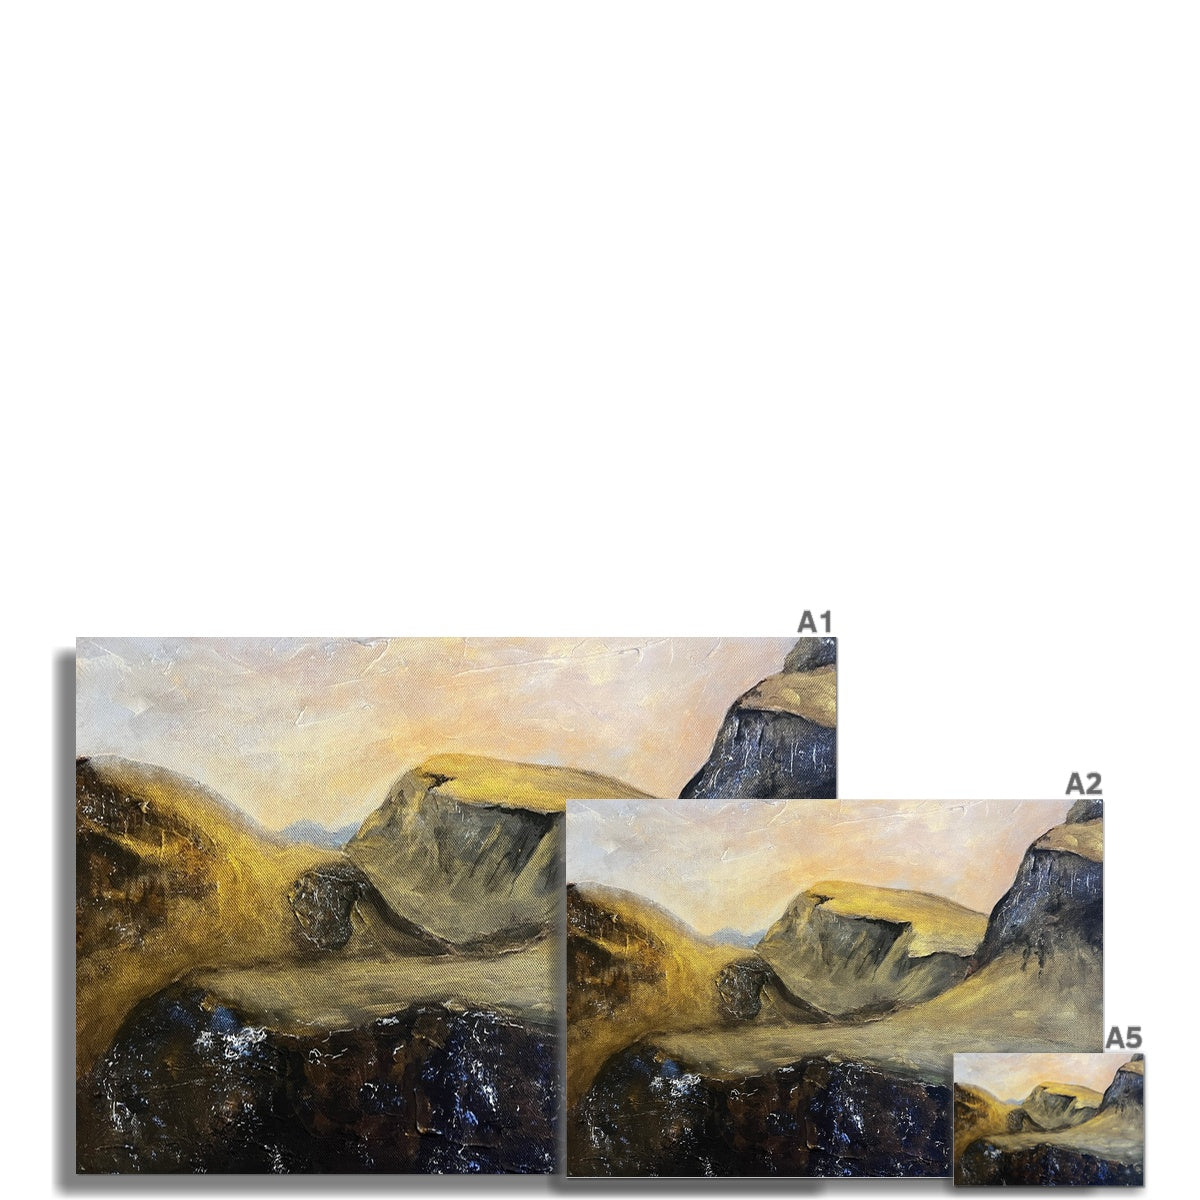 The Quiraing Skye Painting | Fine Art Prints From Scotland-Unframed Prints-Skye Art Gallery-Paintings, Prints, Homeware, Art Gifts From Scotland By Scottish Artist Kevin Hunter